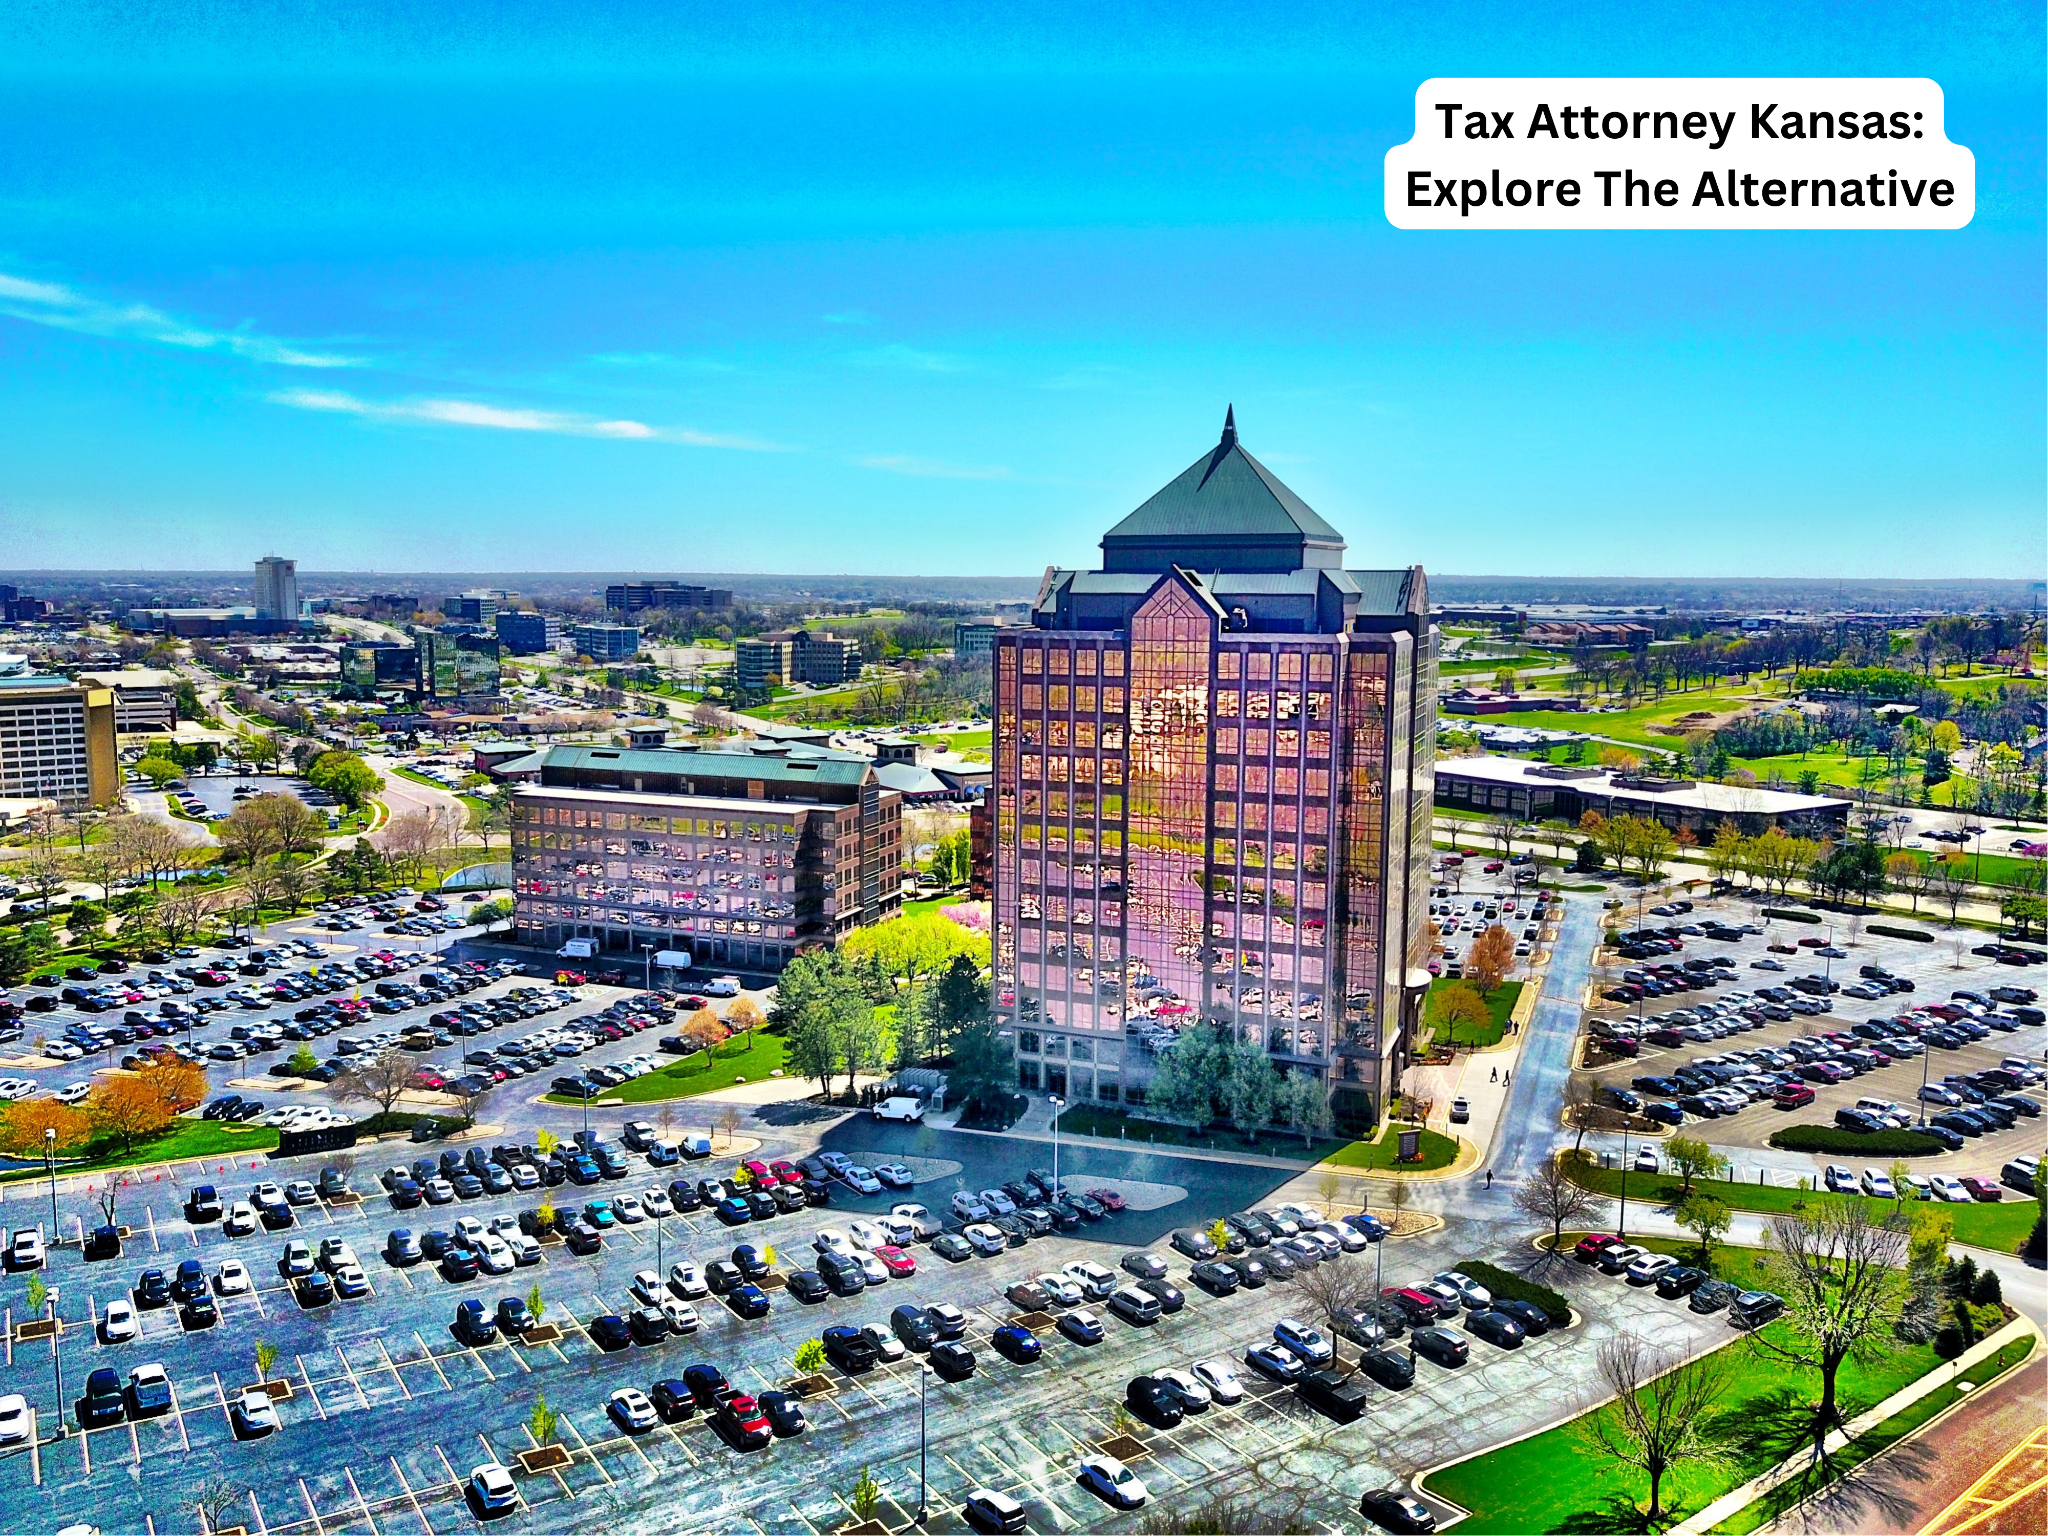 Tax Attorney Kansas: Explore The Alternative